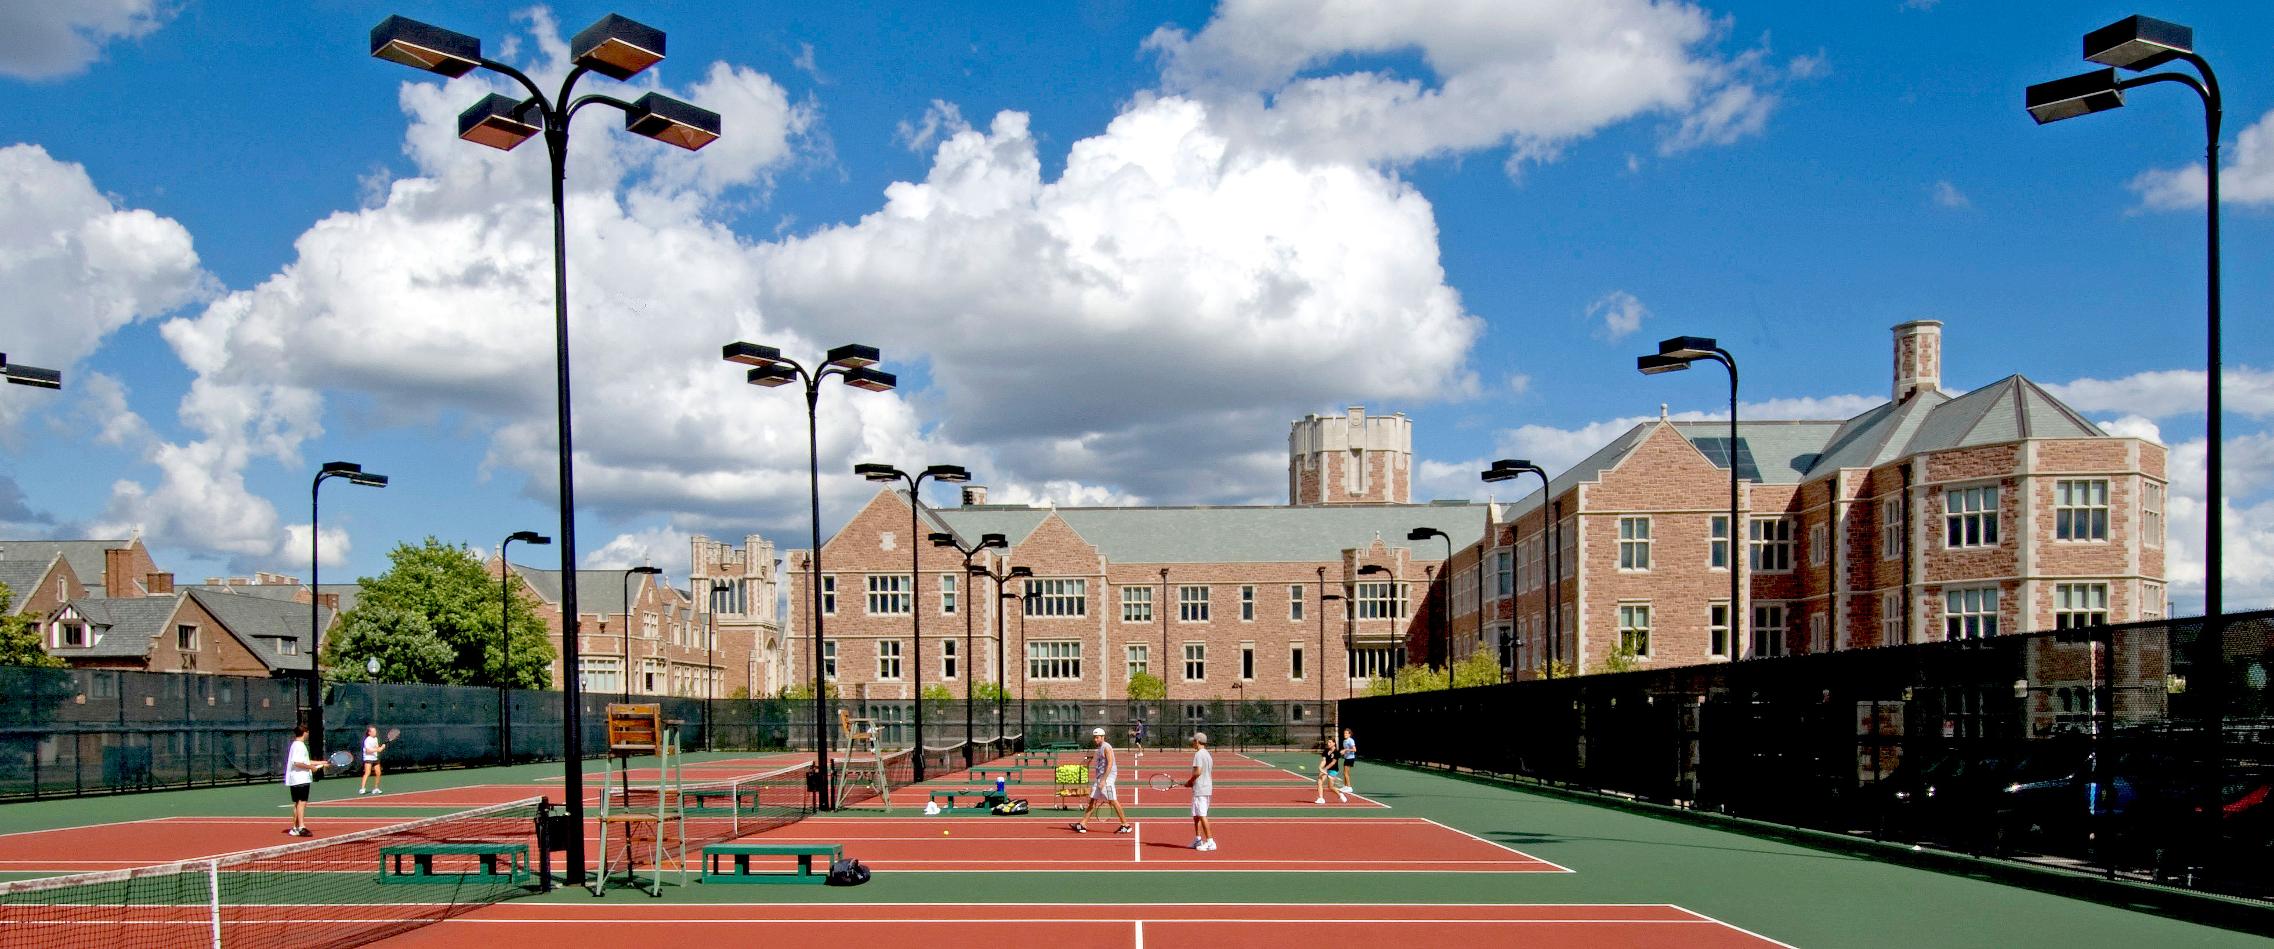 Tao Tennis Center